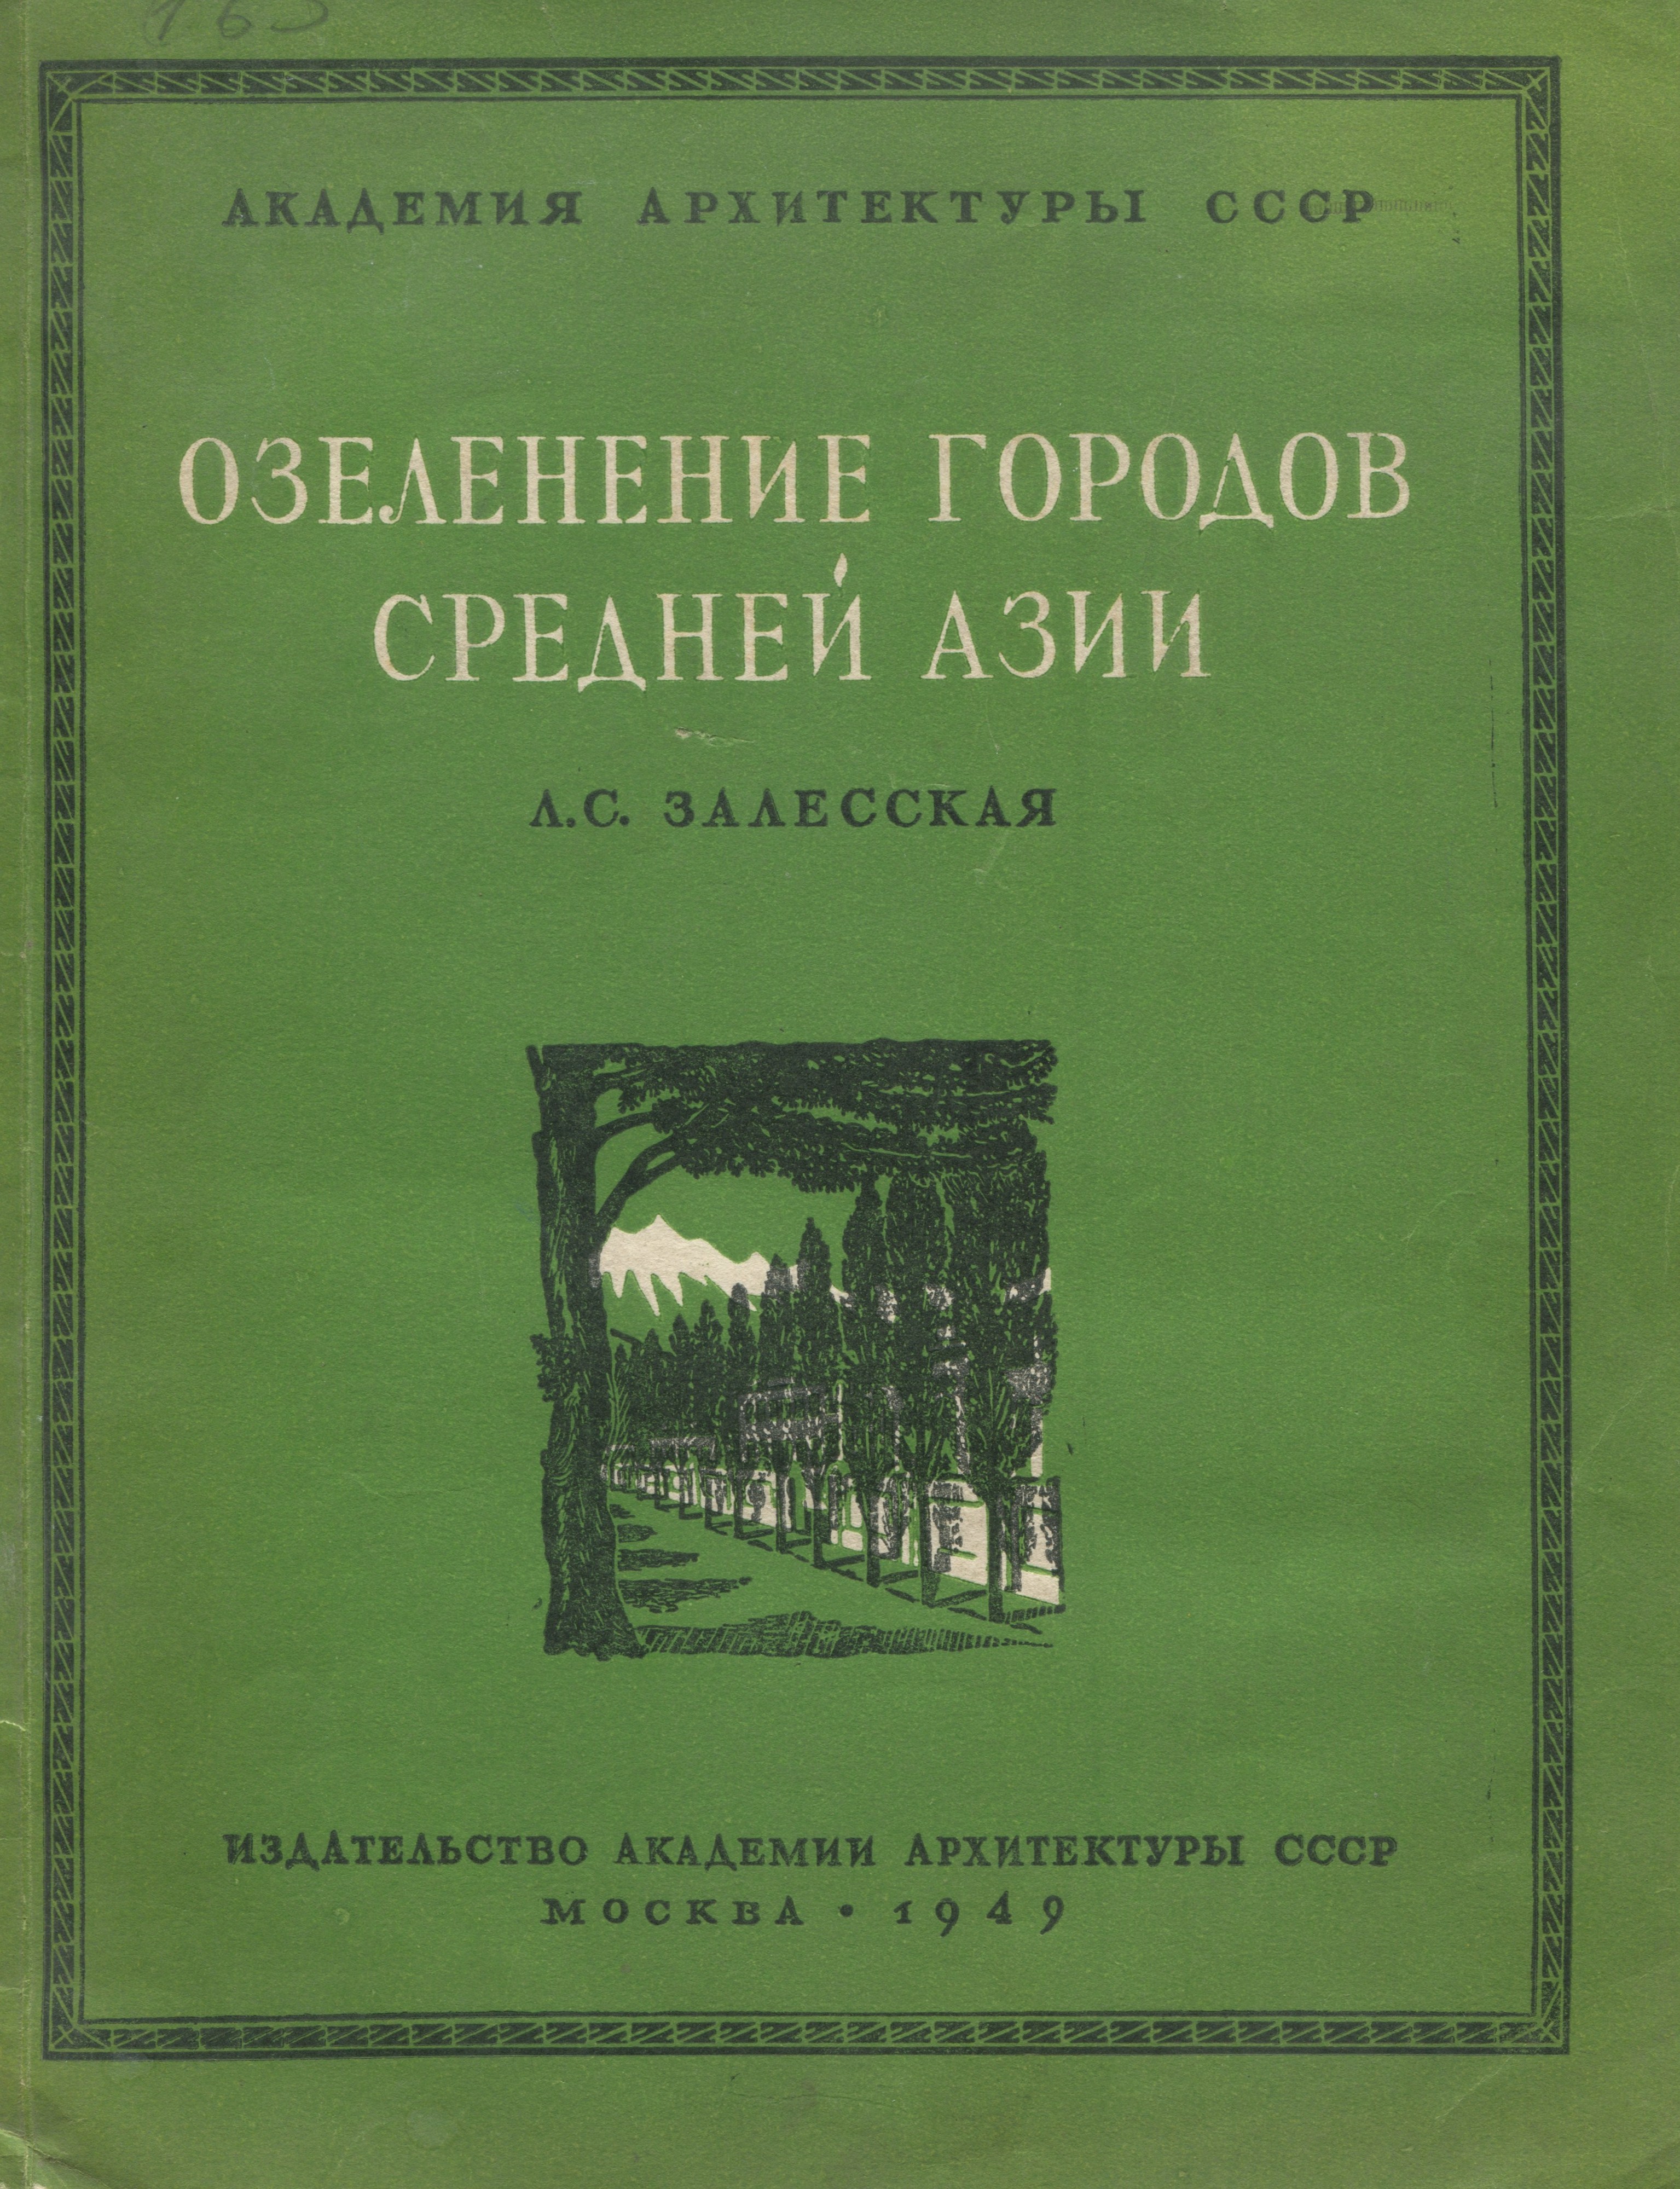 Залесская Л. С. Озеленение городов Средней Азии. — Москва, 1949